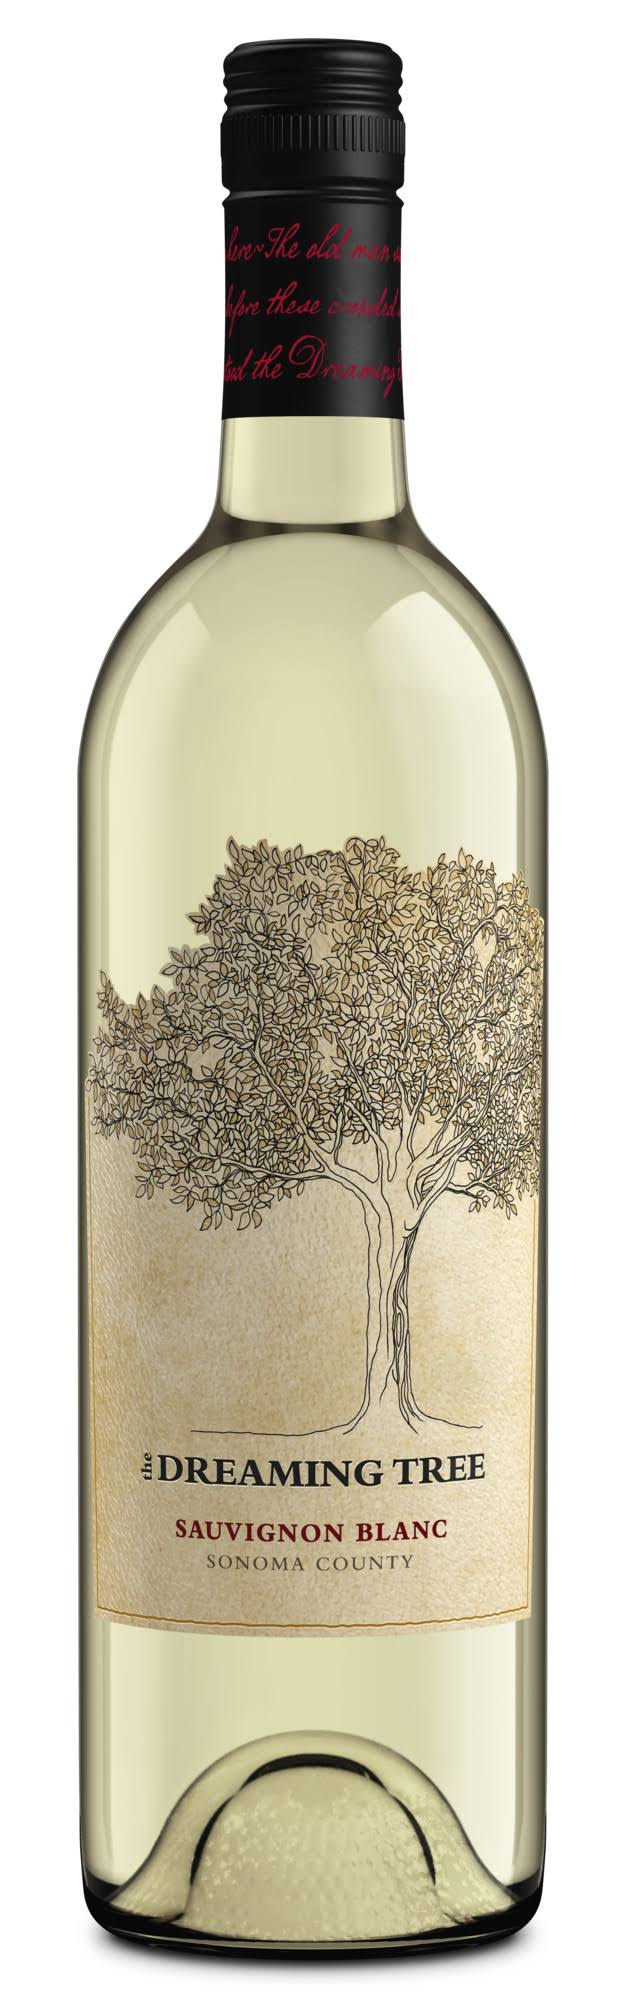 Dreaming Tree Sauvignon Blanc, Sonoma County, 2015 - 750 ml